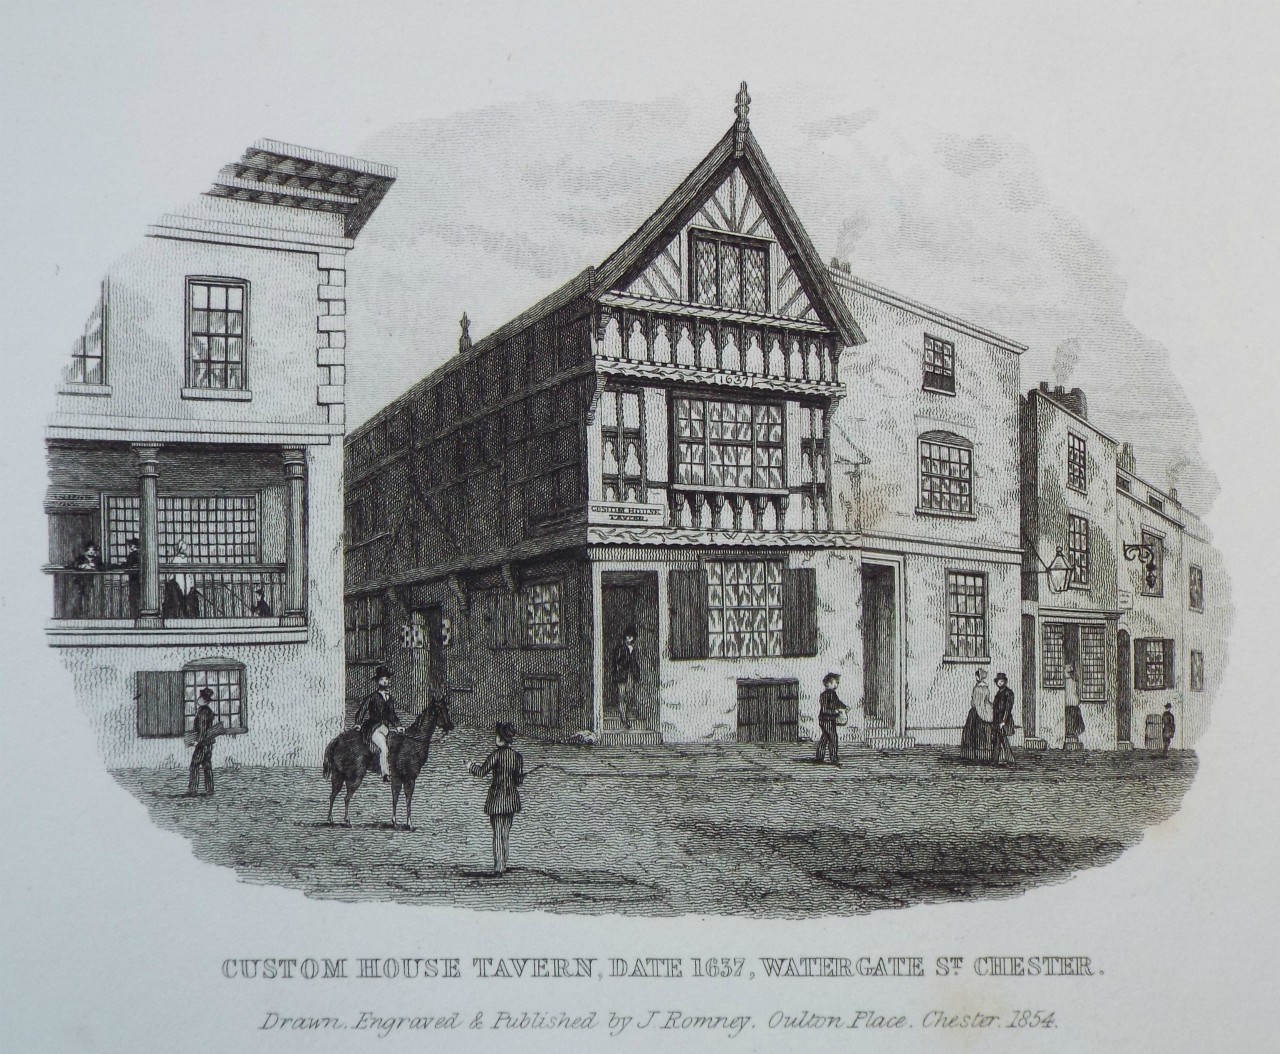 Print - Custom House Tavern, Date 1637, Watergate St. Chester. - Romney